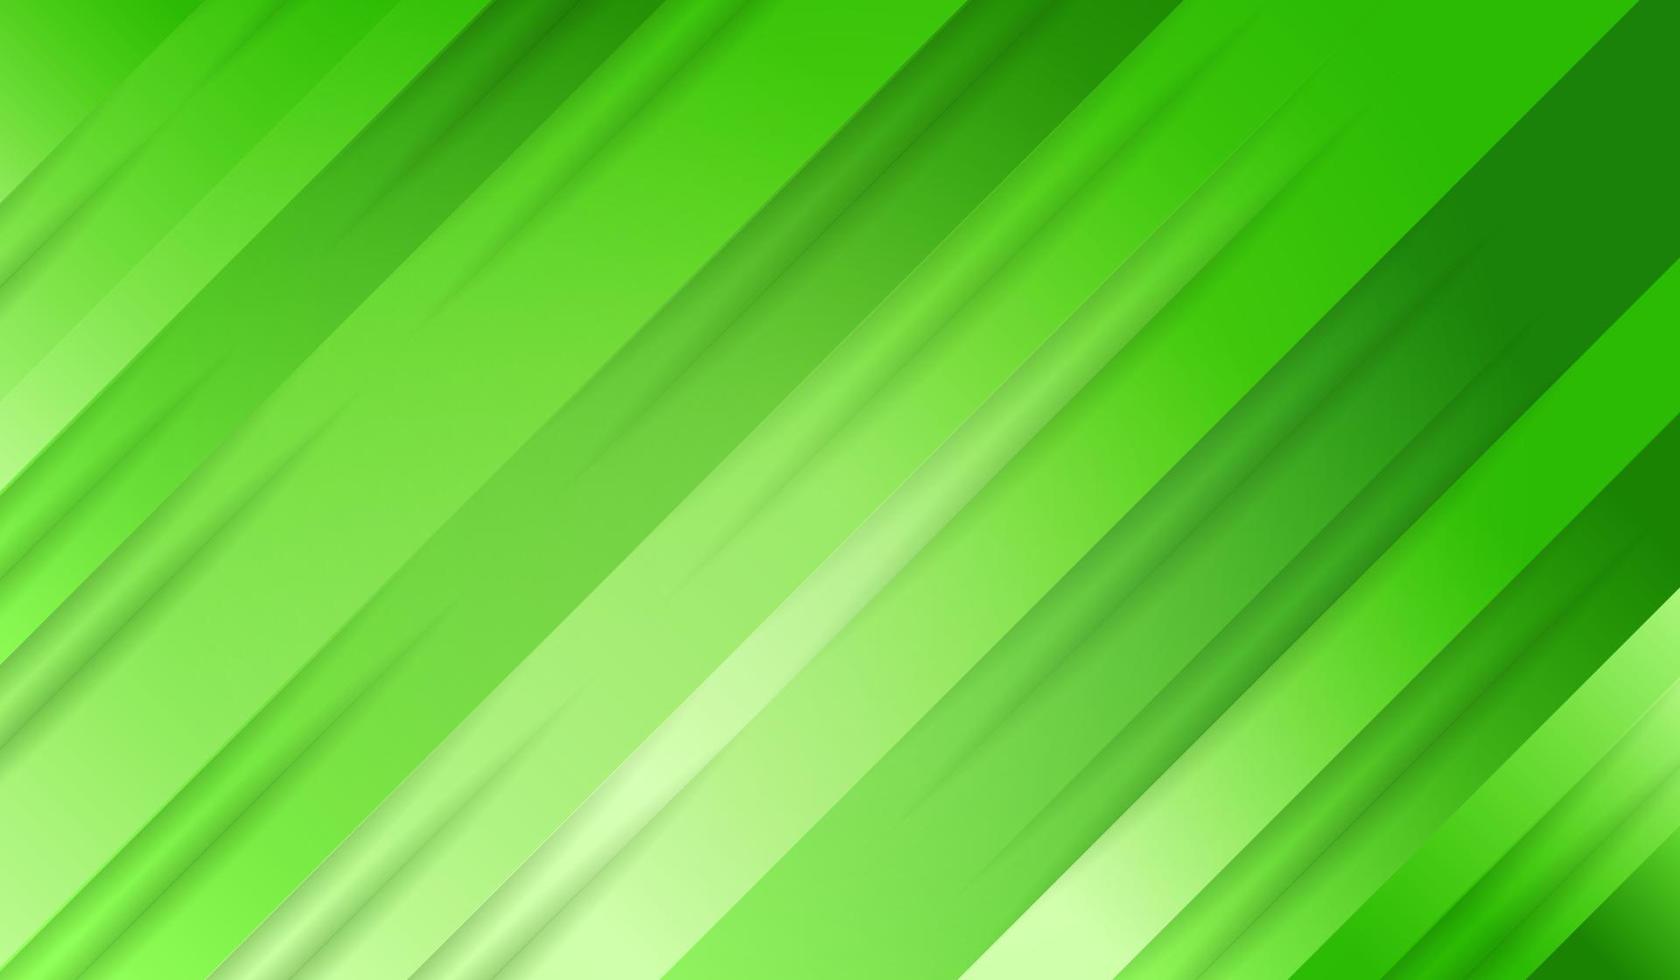 Stripe shapes background green color vector